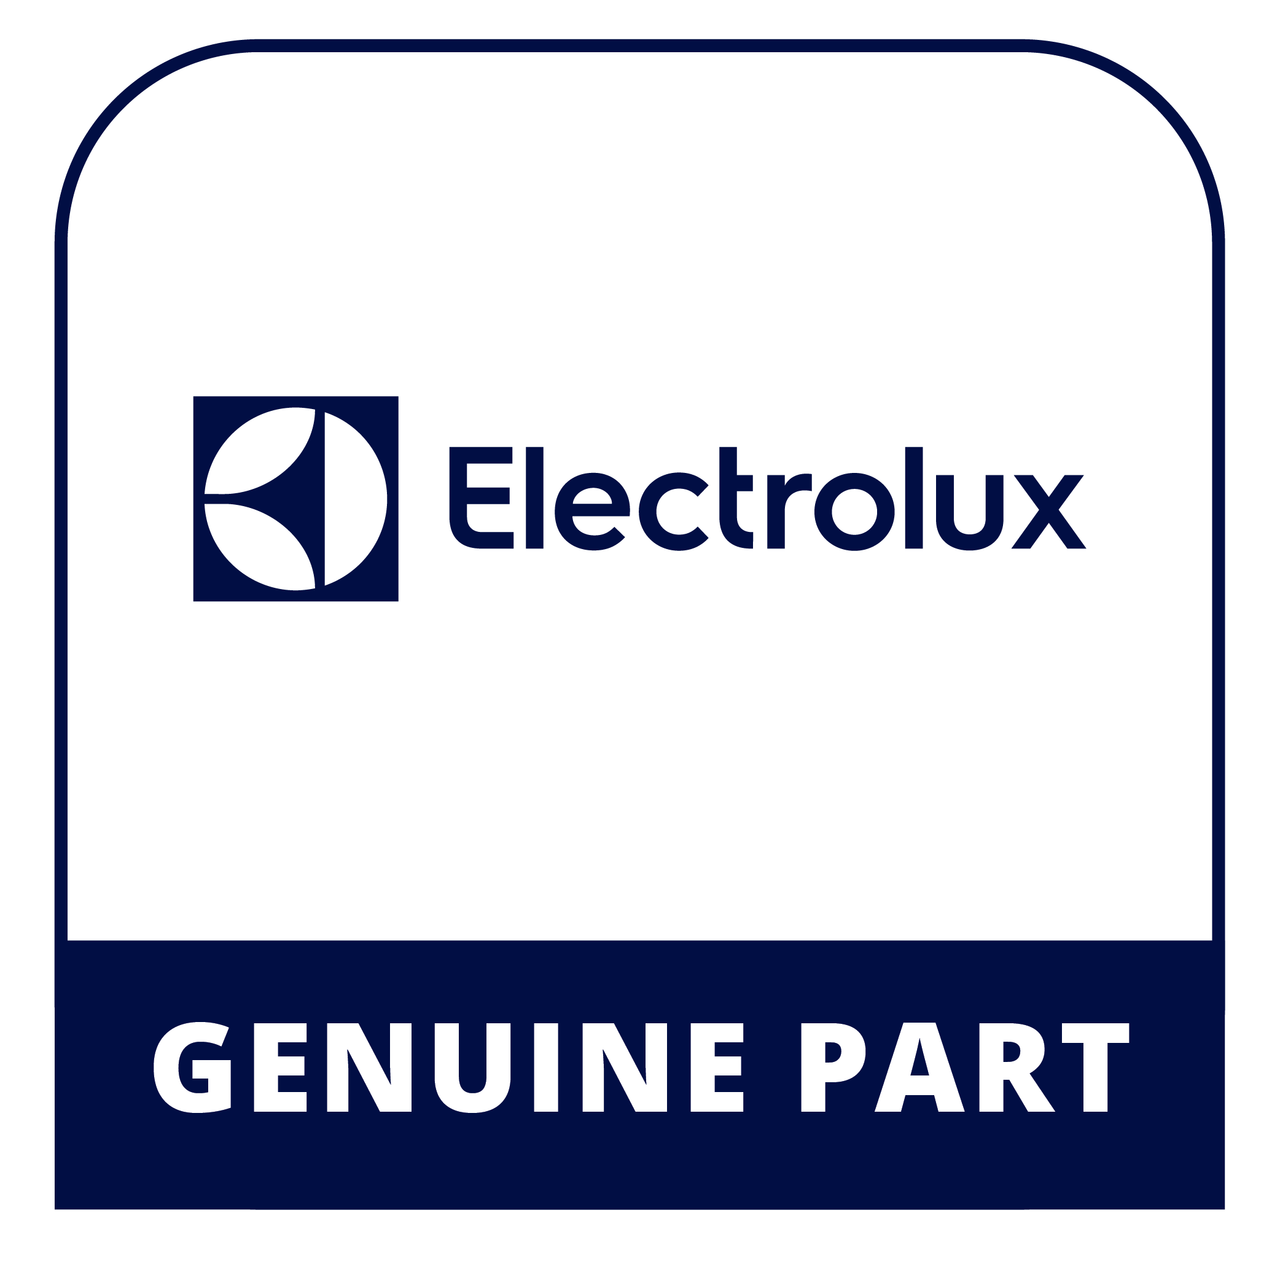 Frigidaire - Electrolux 5304525348 Stop - Genuine Electrolux Part